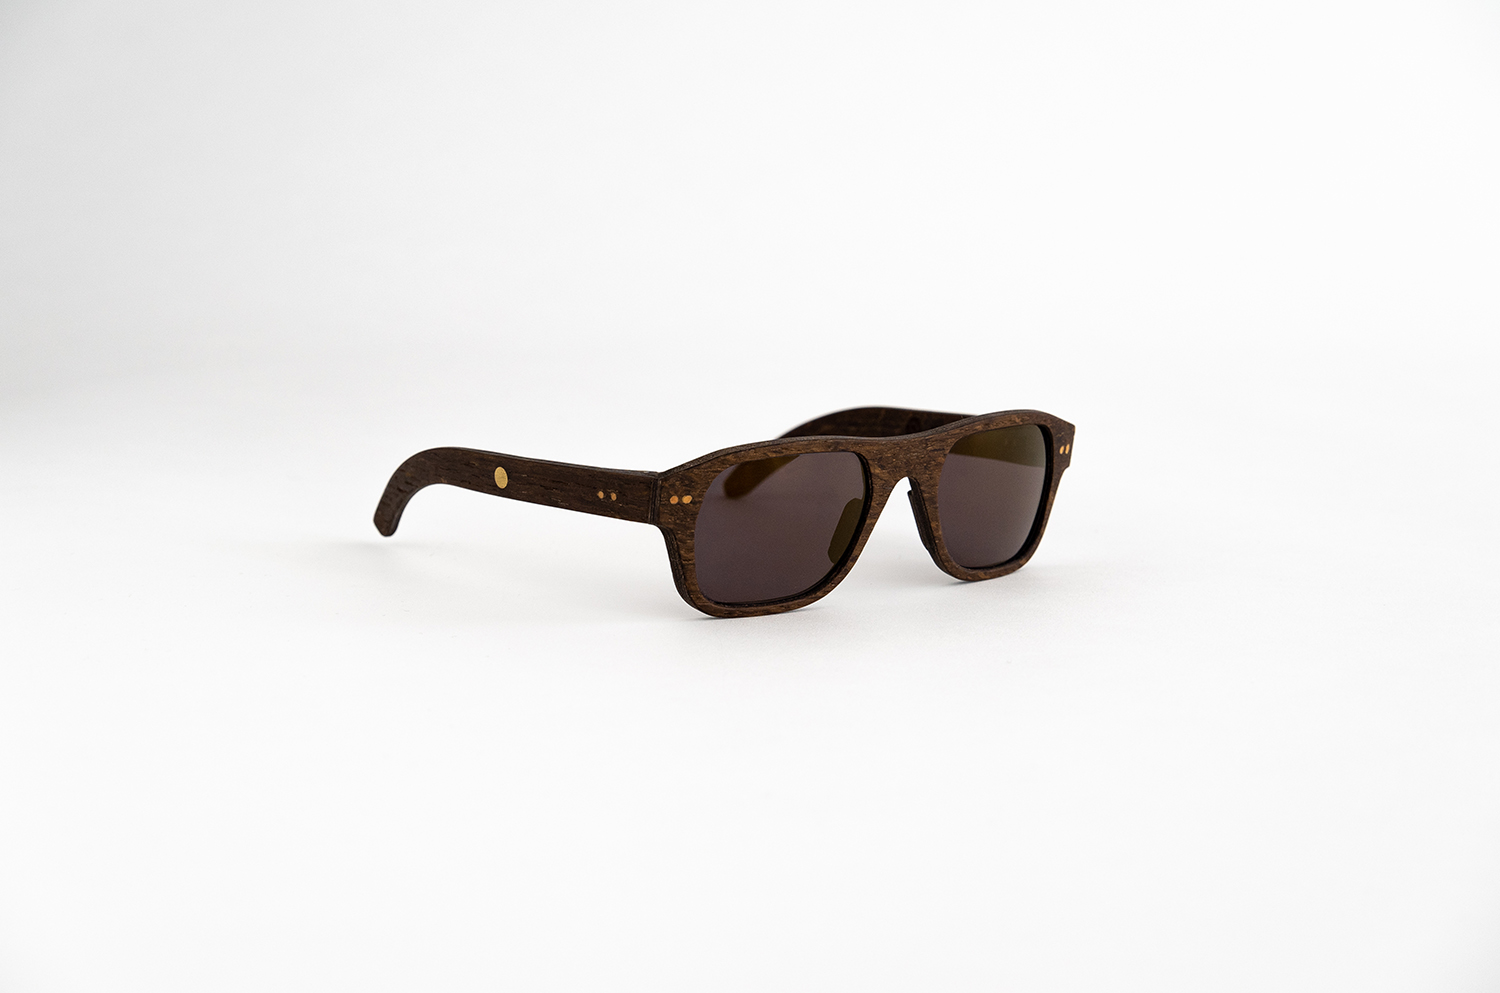 Sunglasses by Mario Ruiz for Nagel Ibiza